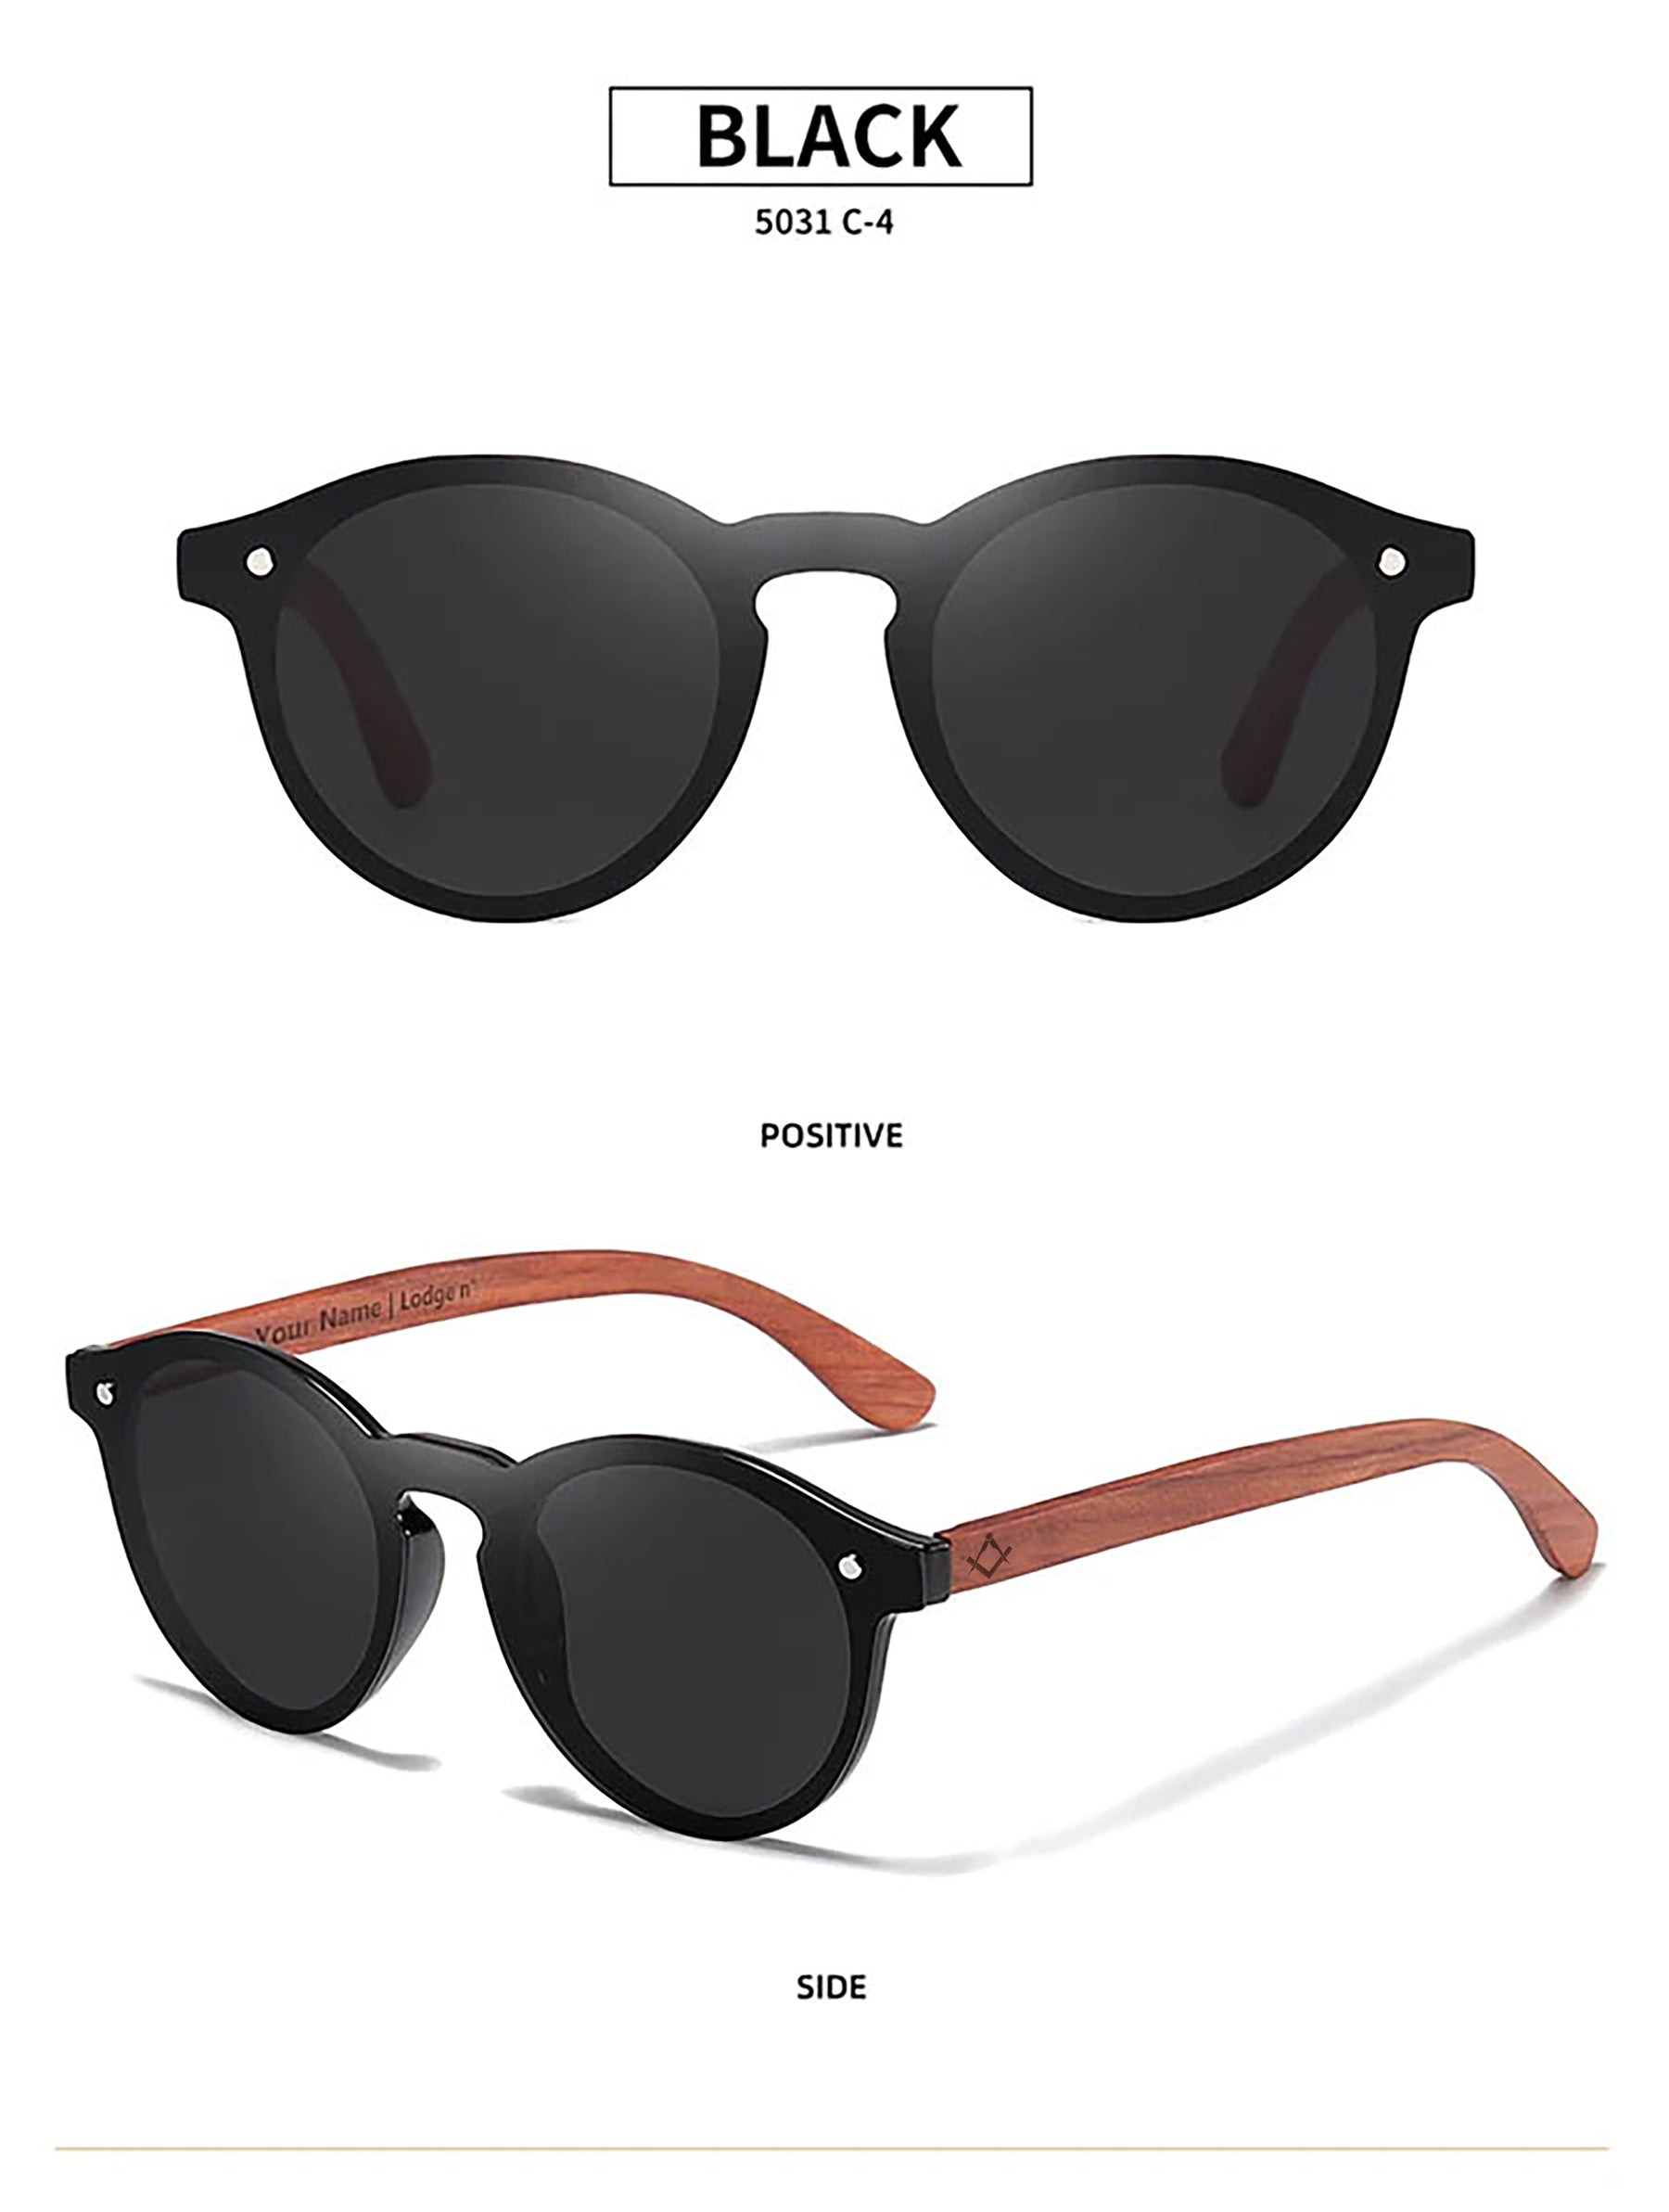 Master Mason Blue Lodge Sunglasses - Leather Case Included